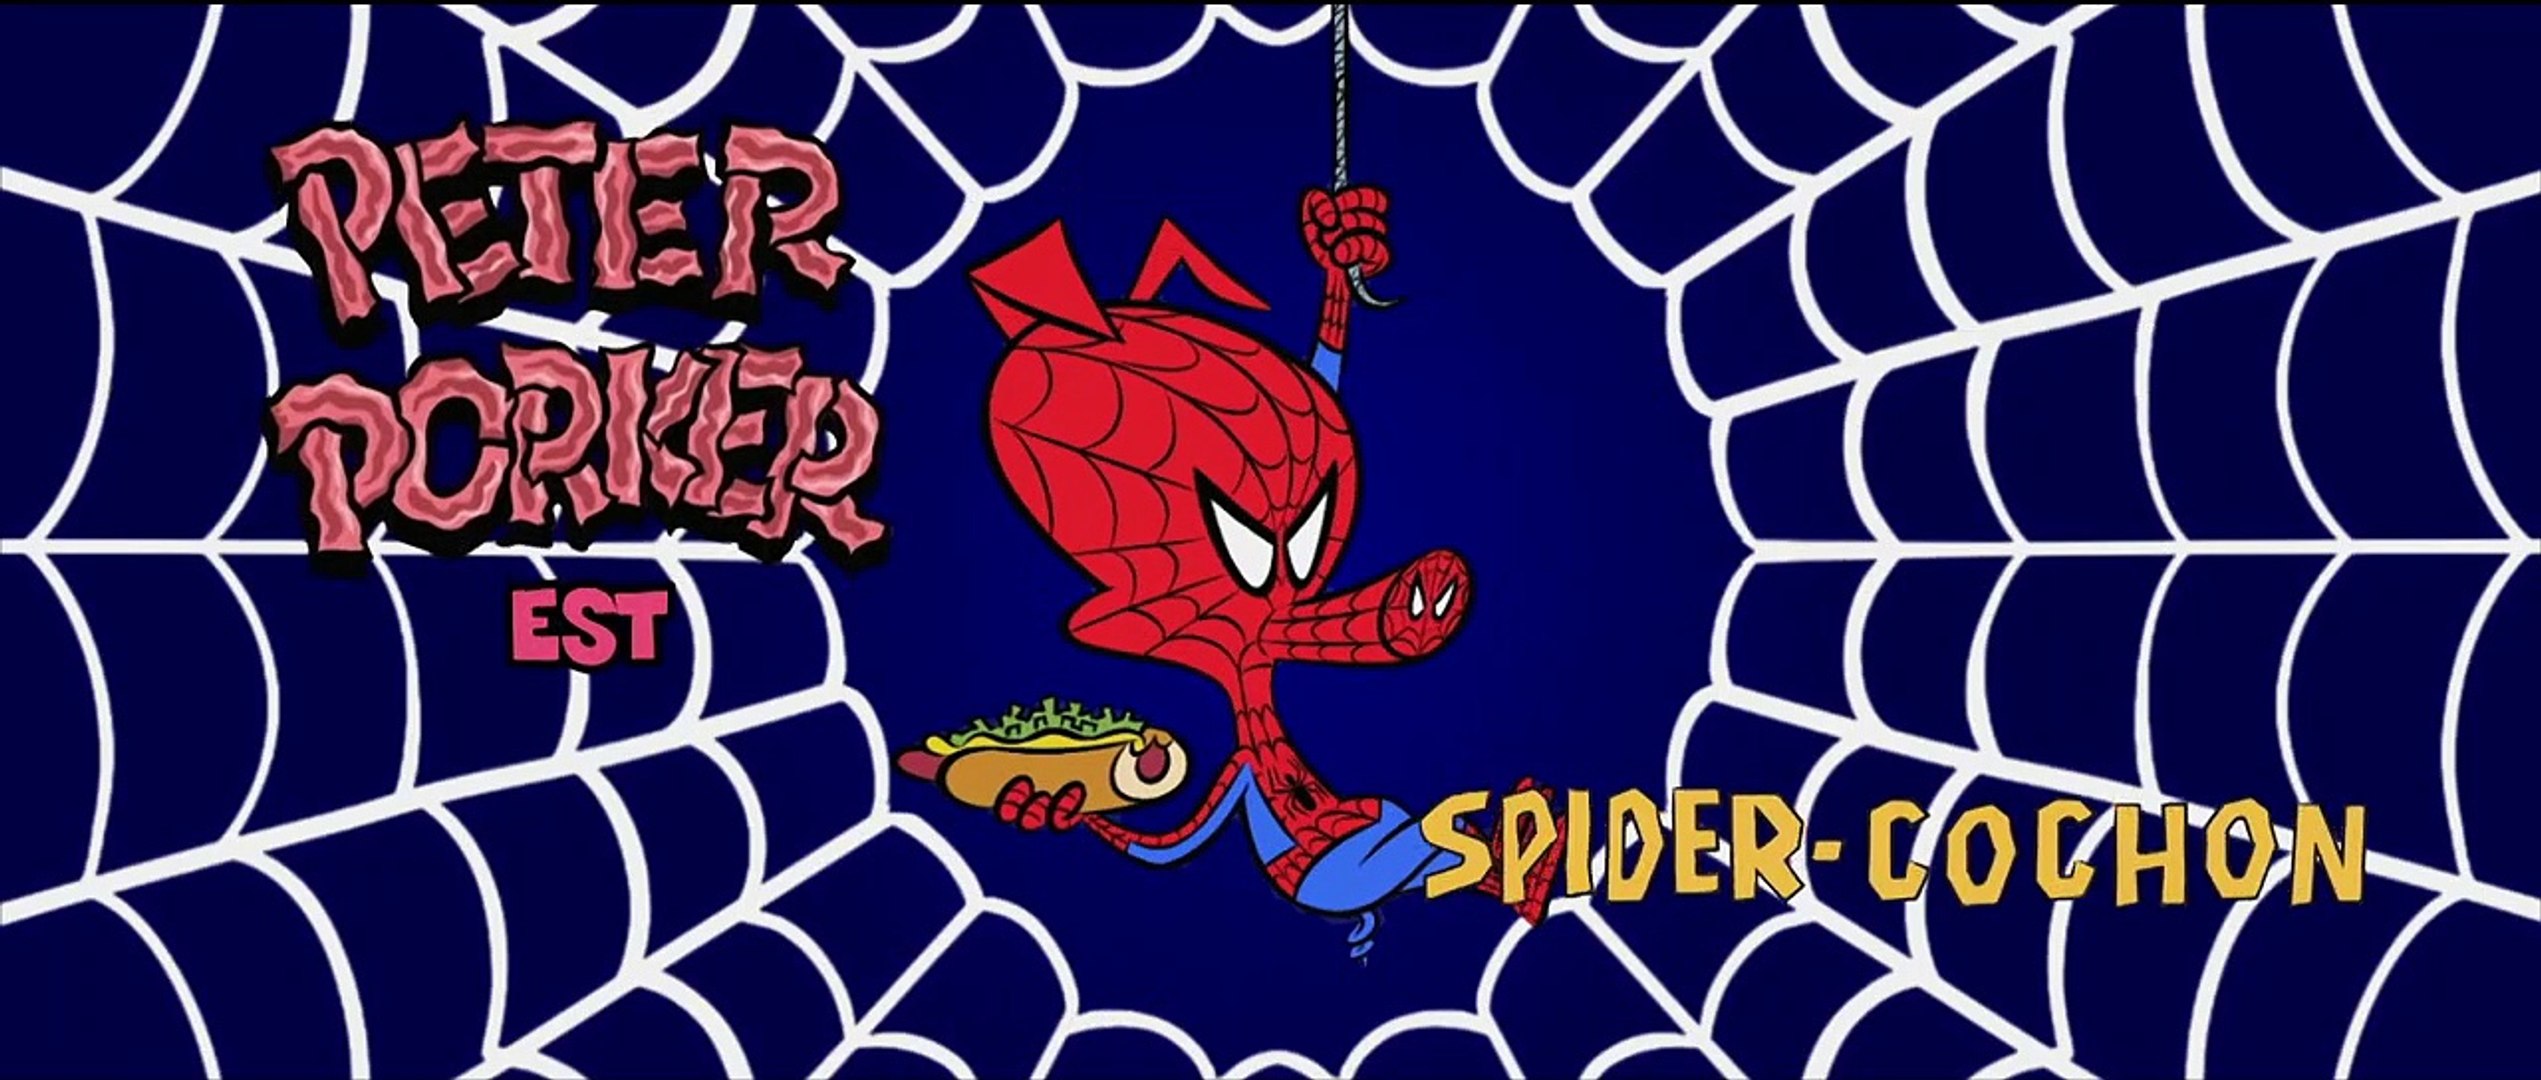 Spider-Man New Generation – TV Spot Spider-Cochon – VF - Vidéo Dailymotion